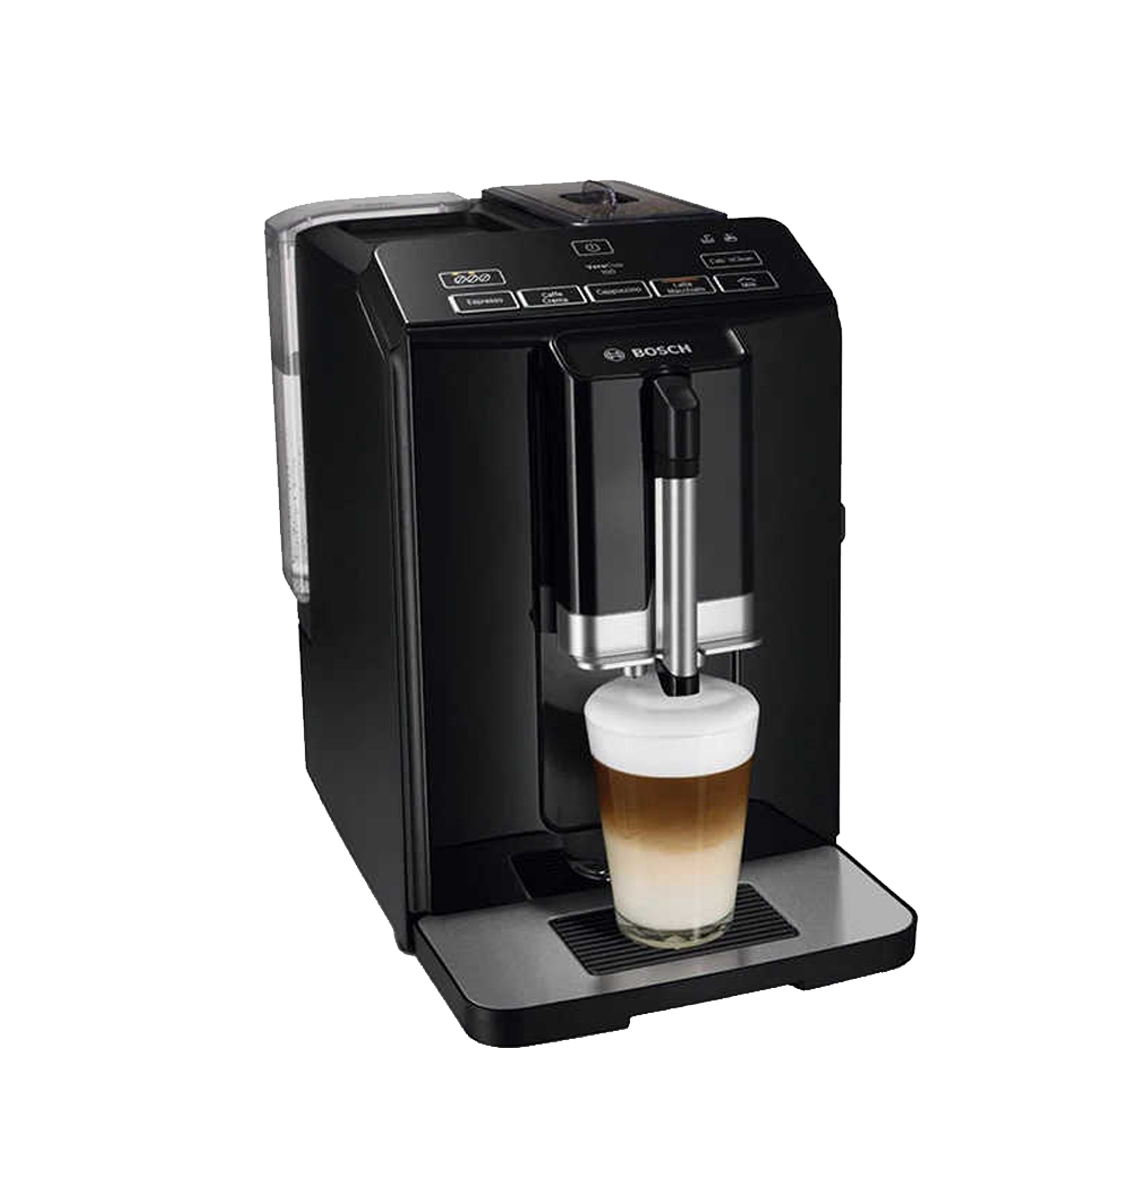 Aparat za espreso kafu VeroCup 100 1300W sivi Bosch